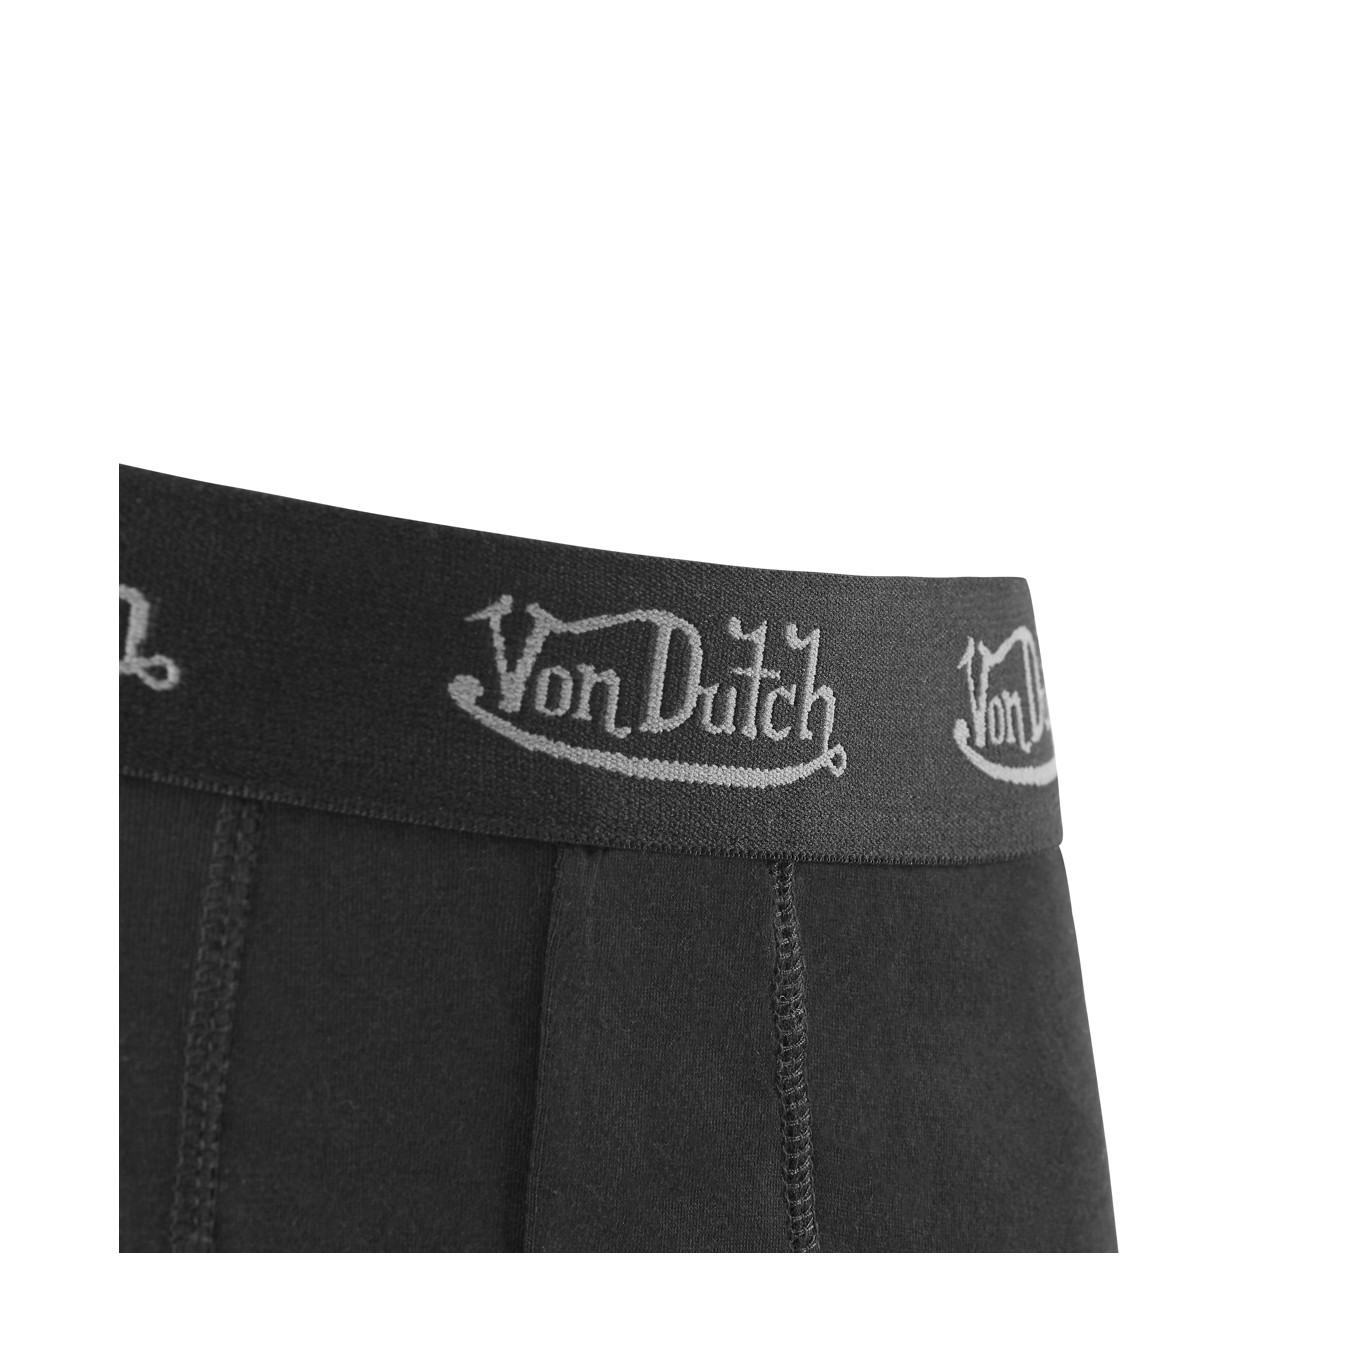 King Von Boxers Custom Photo Boxers Men's Underwear Microphone Boxers Black